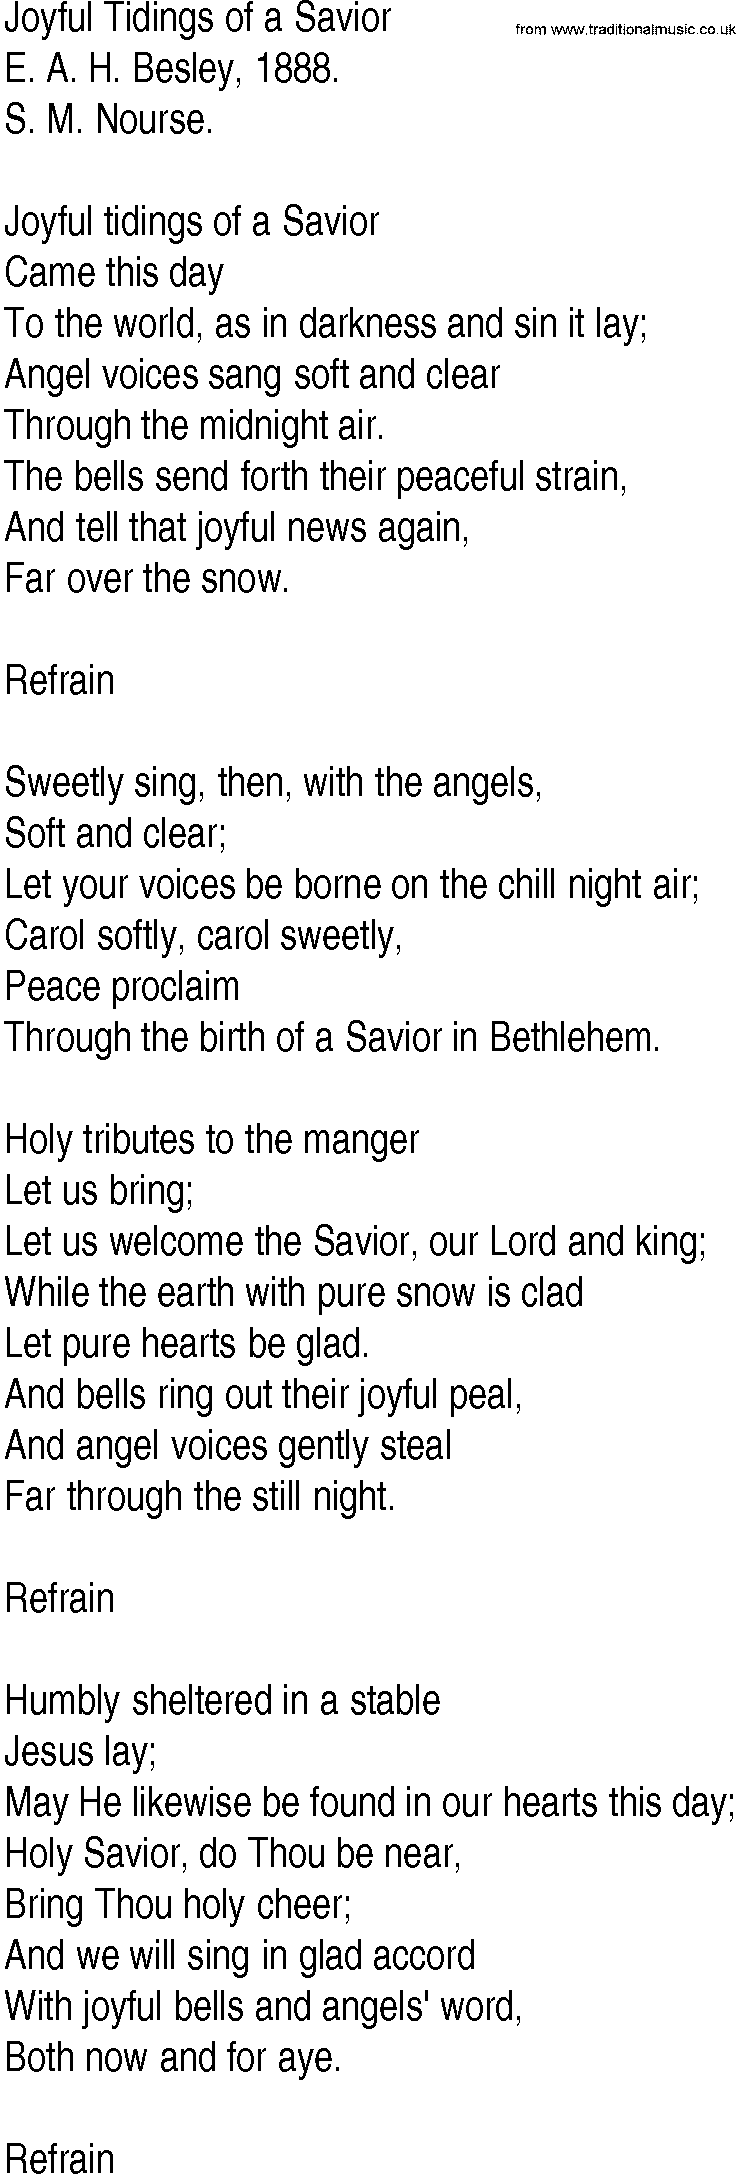 Hymn and Gospel Song: Joyful Tidings of a Savior by E A H Besley lyrics